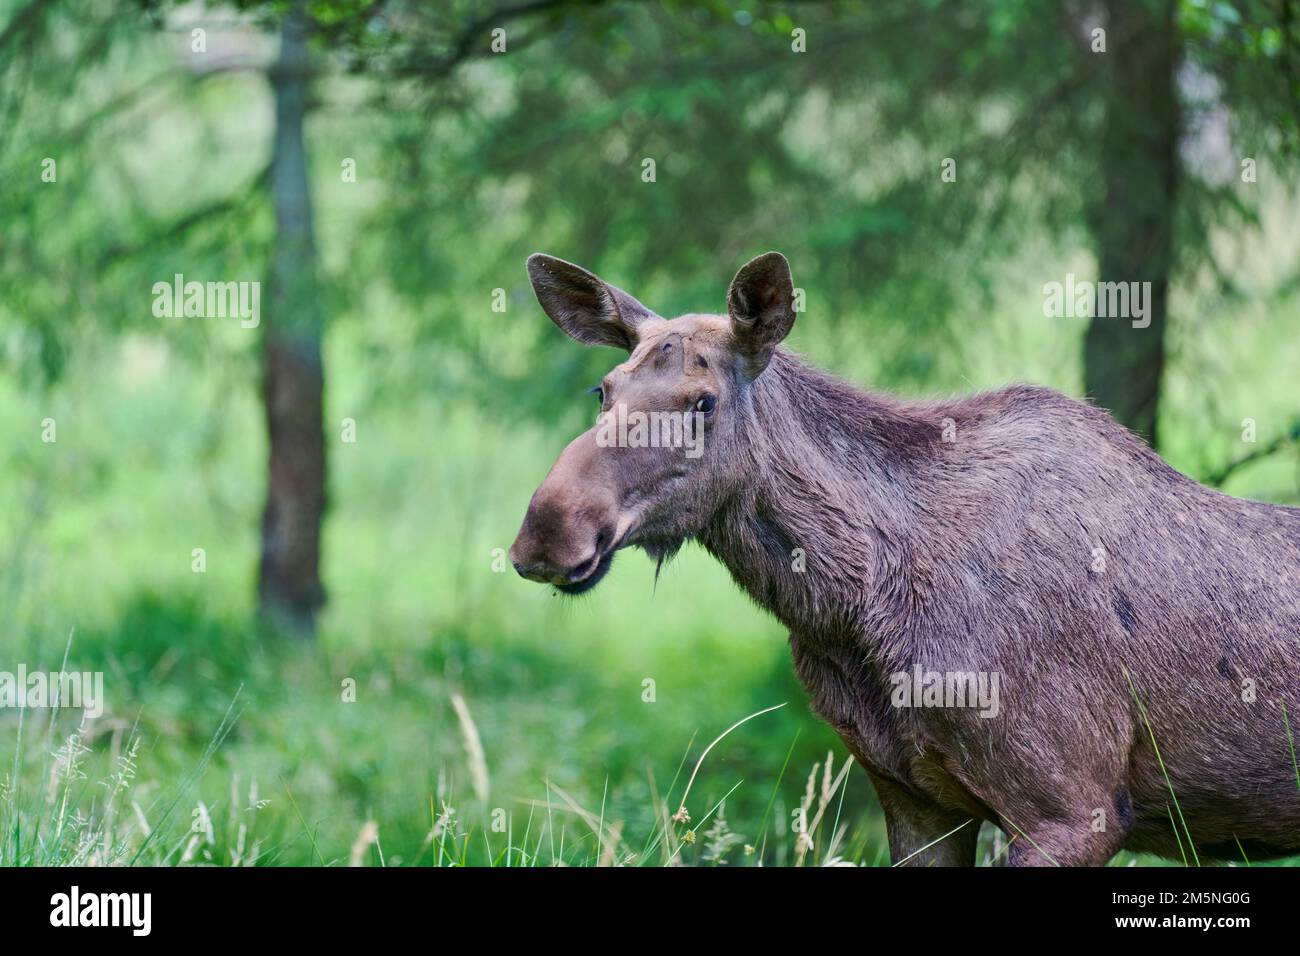 Europaeischer Elch, Alces alces, European moose Stock Photo